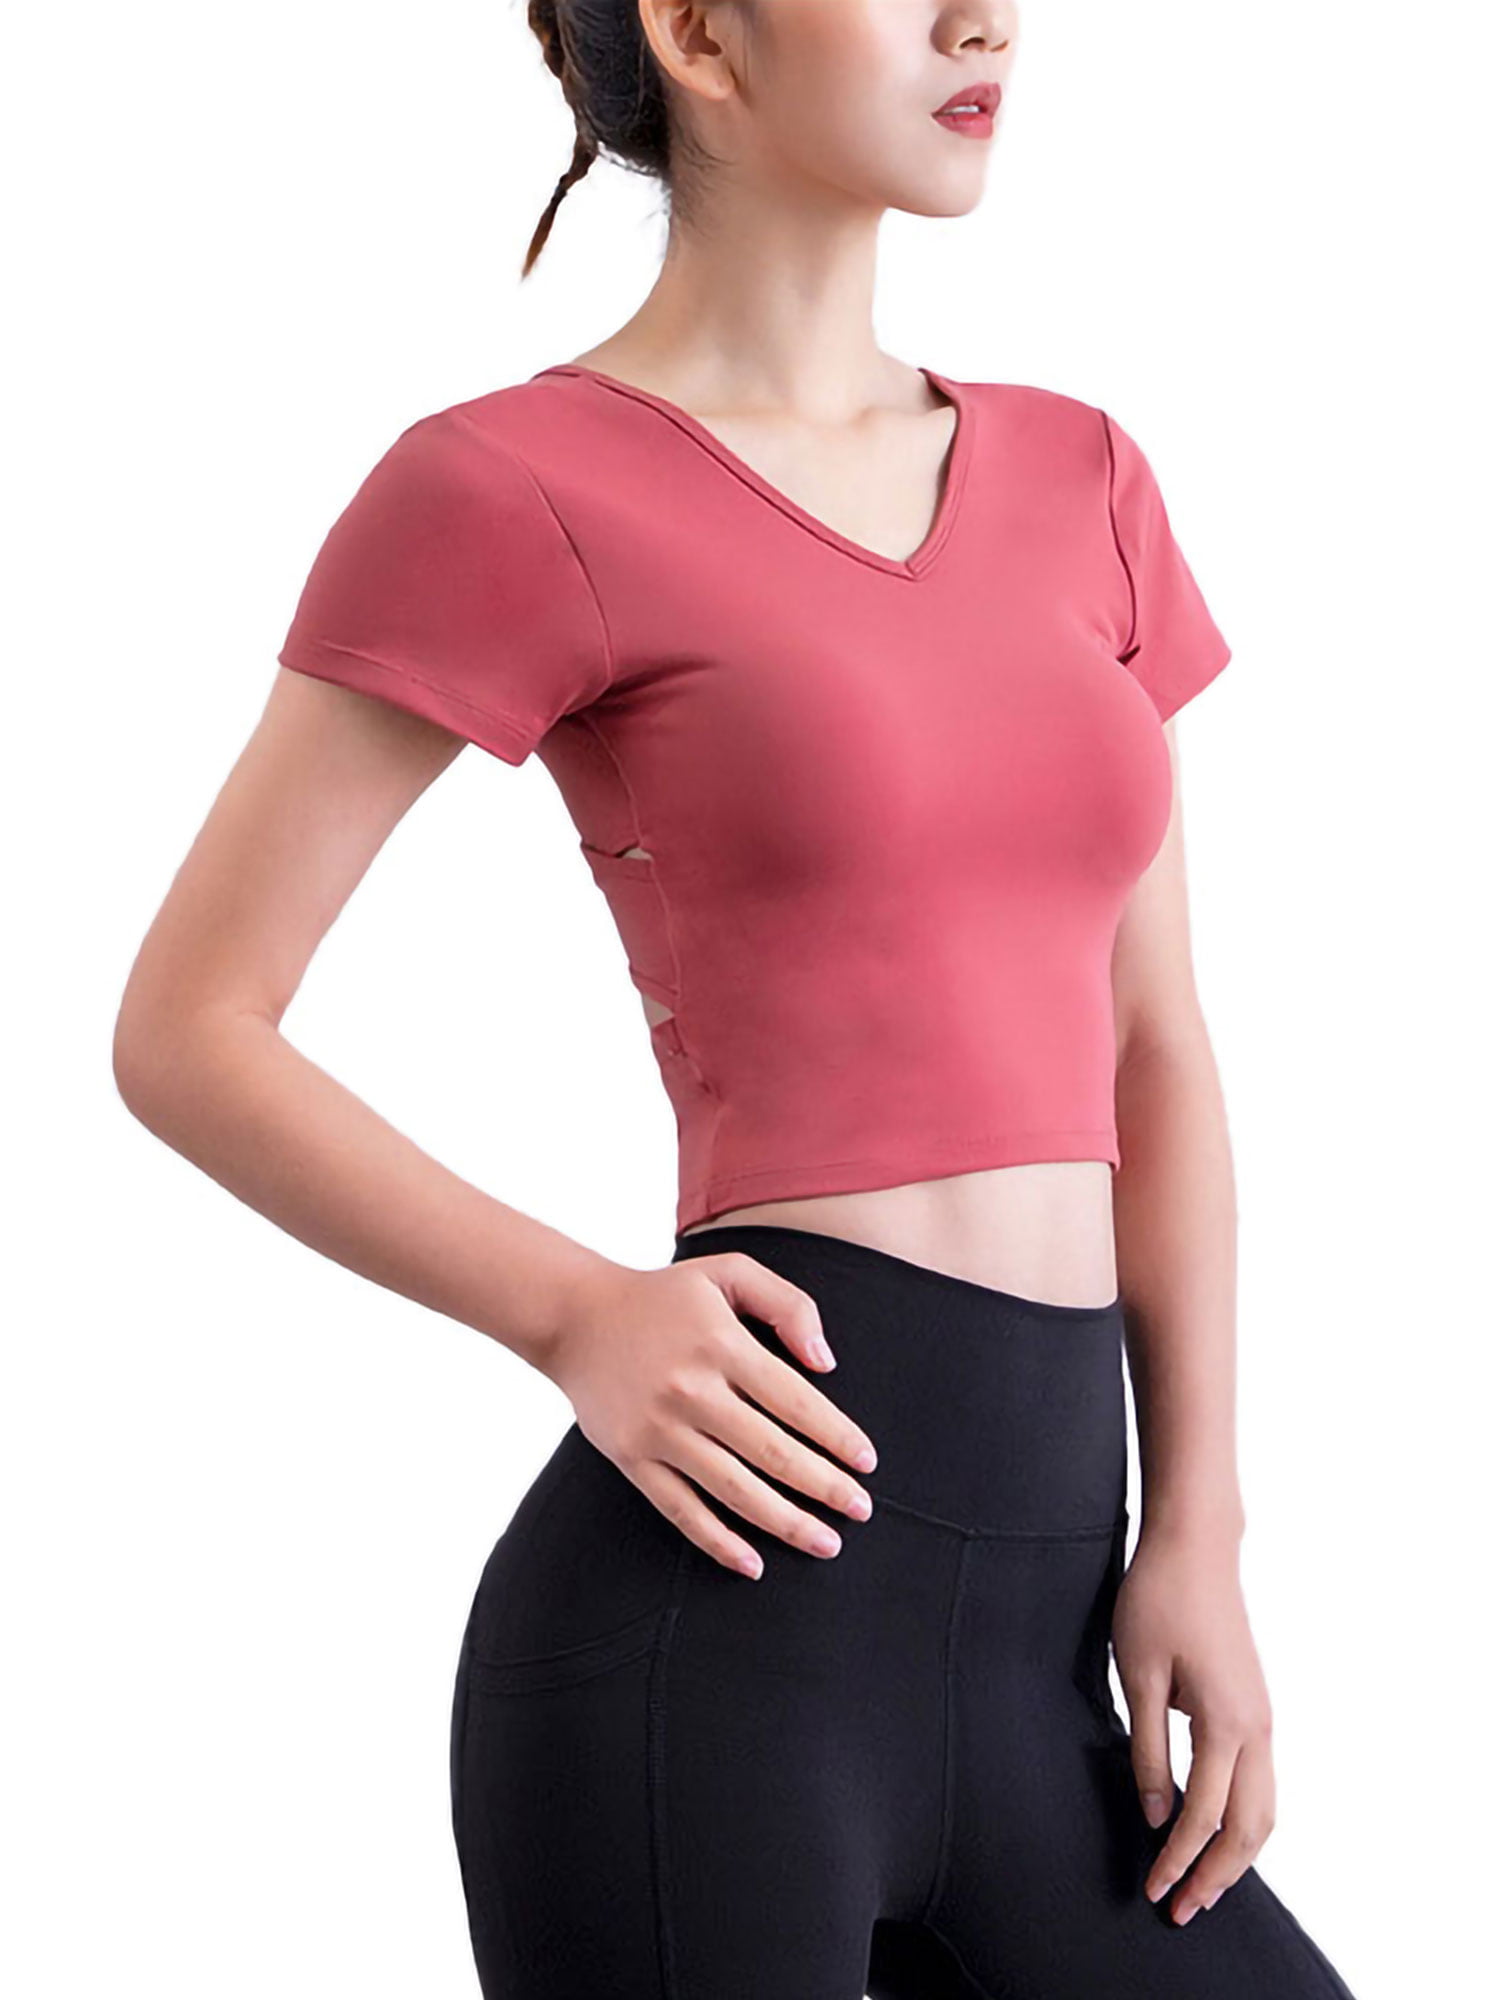 Women's Sports T Shirt,V Neck,Short Sleeve Gym Workout Tops for Women